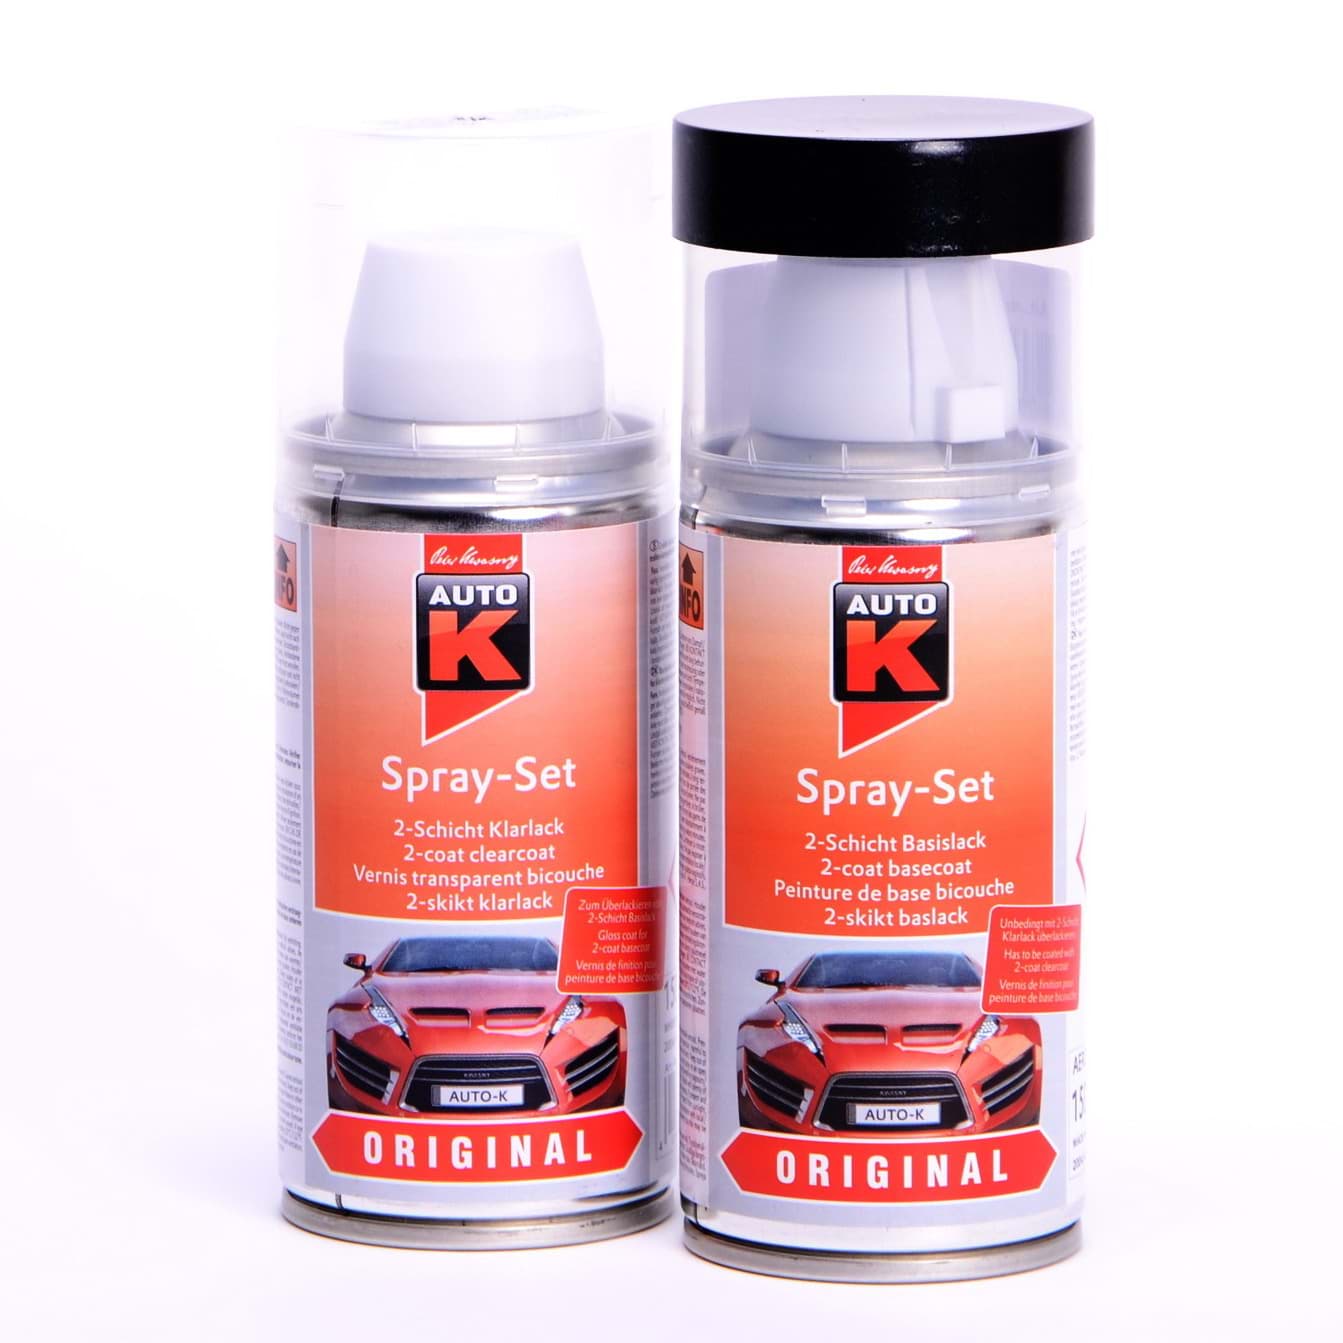 Obraz Auto-K Spray-Set Autolack für Renault 632 Gris Boreal met 43439